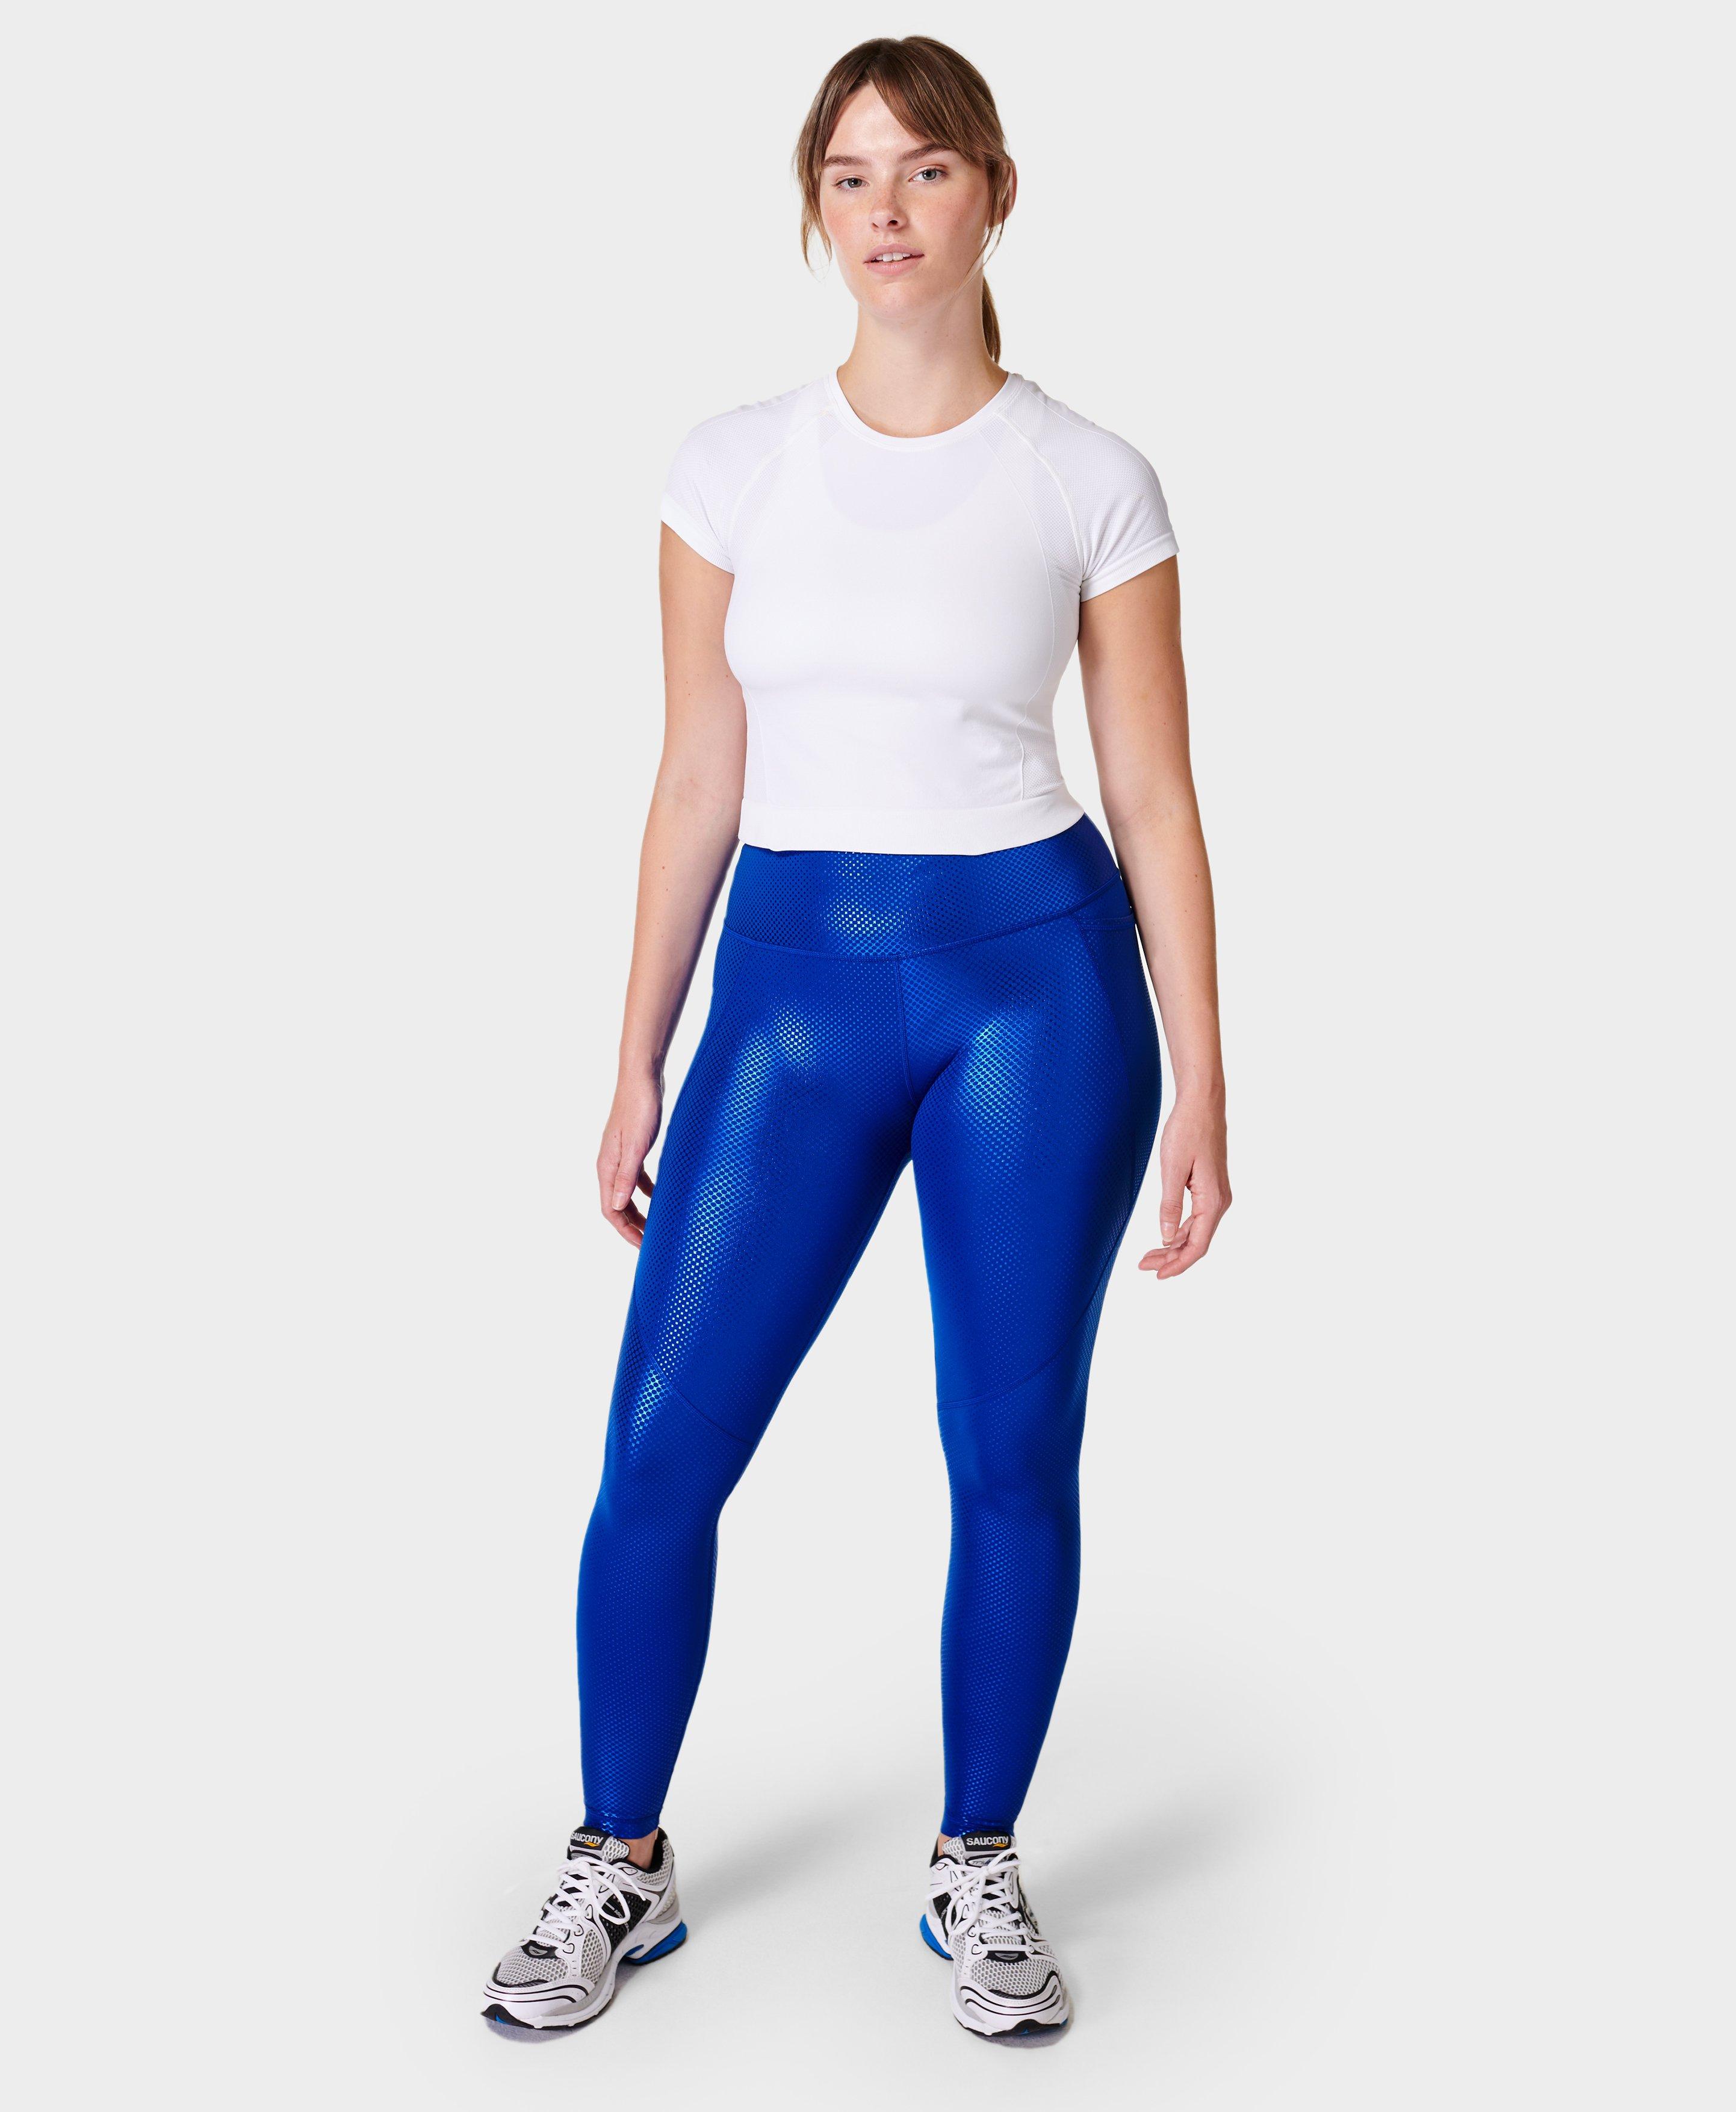 Power Workout Leggings - Blue Exposure Print, Women's Leggings